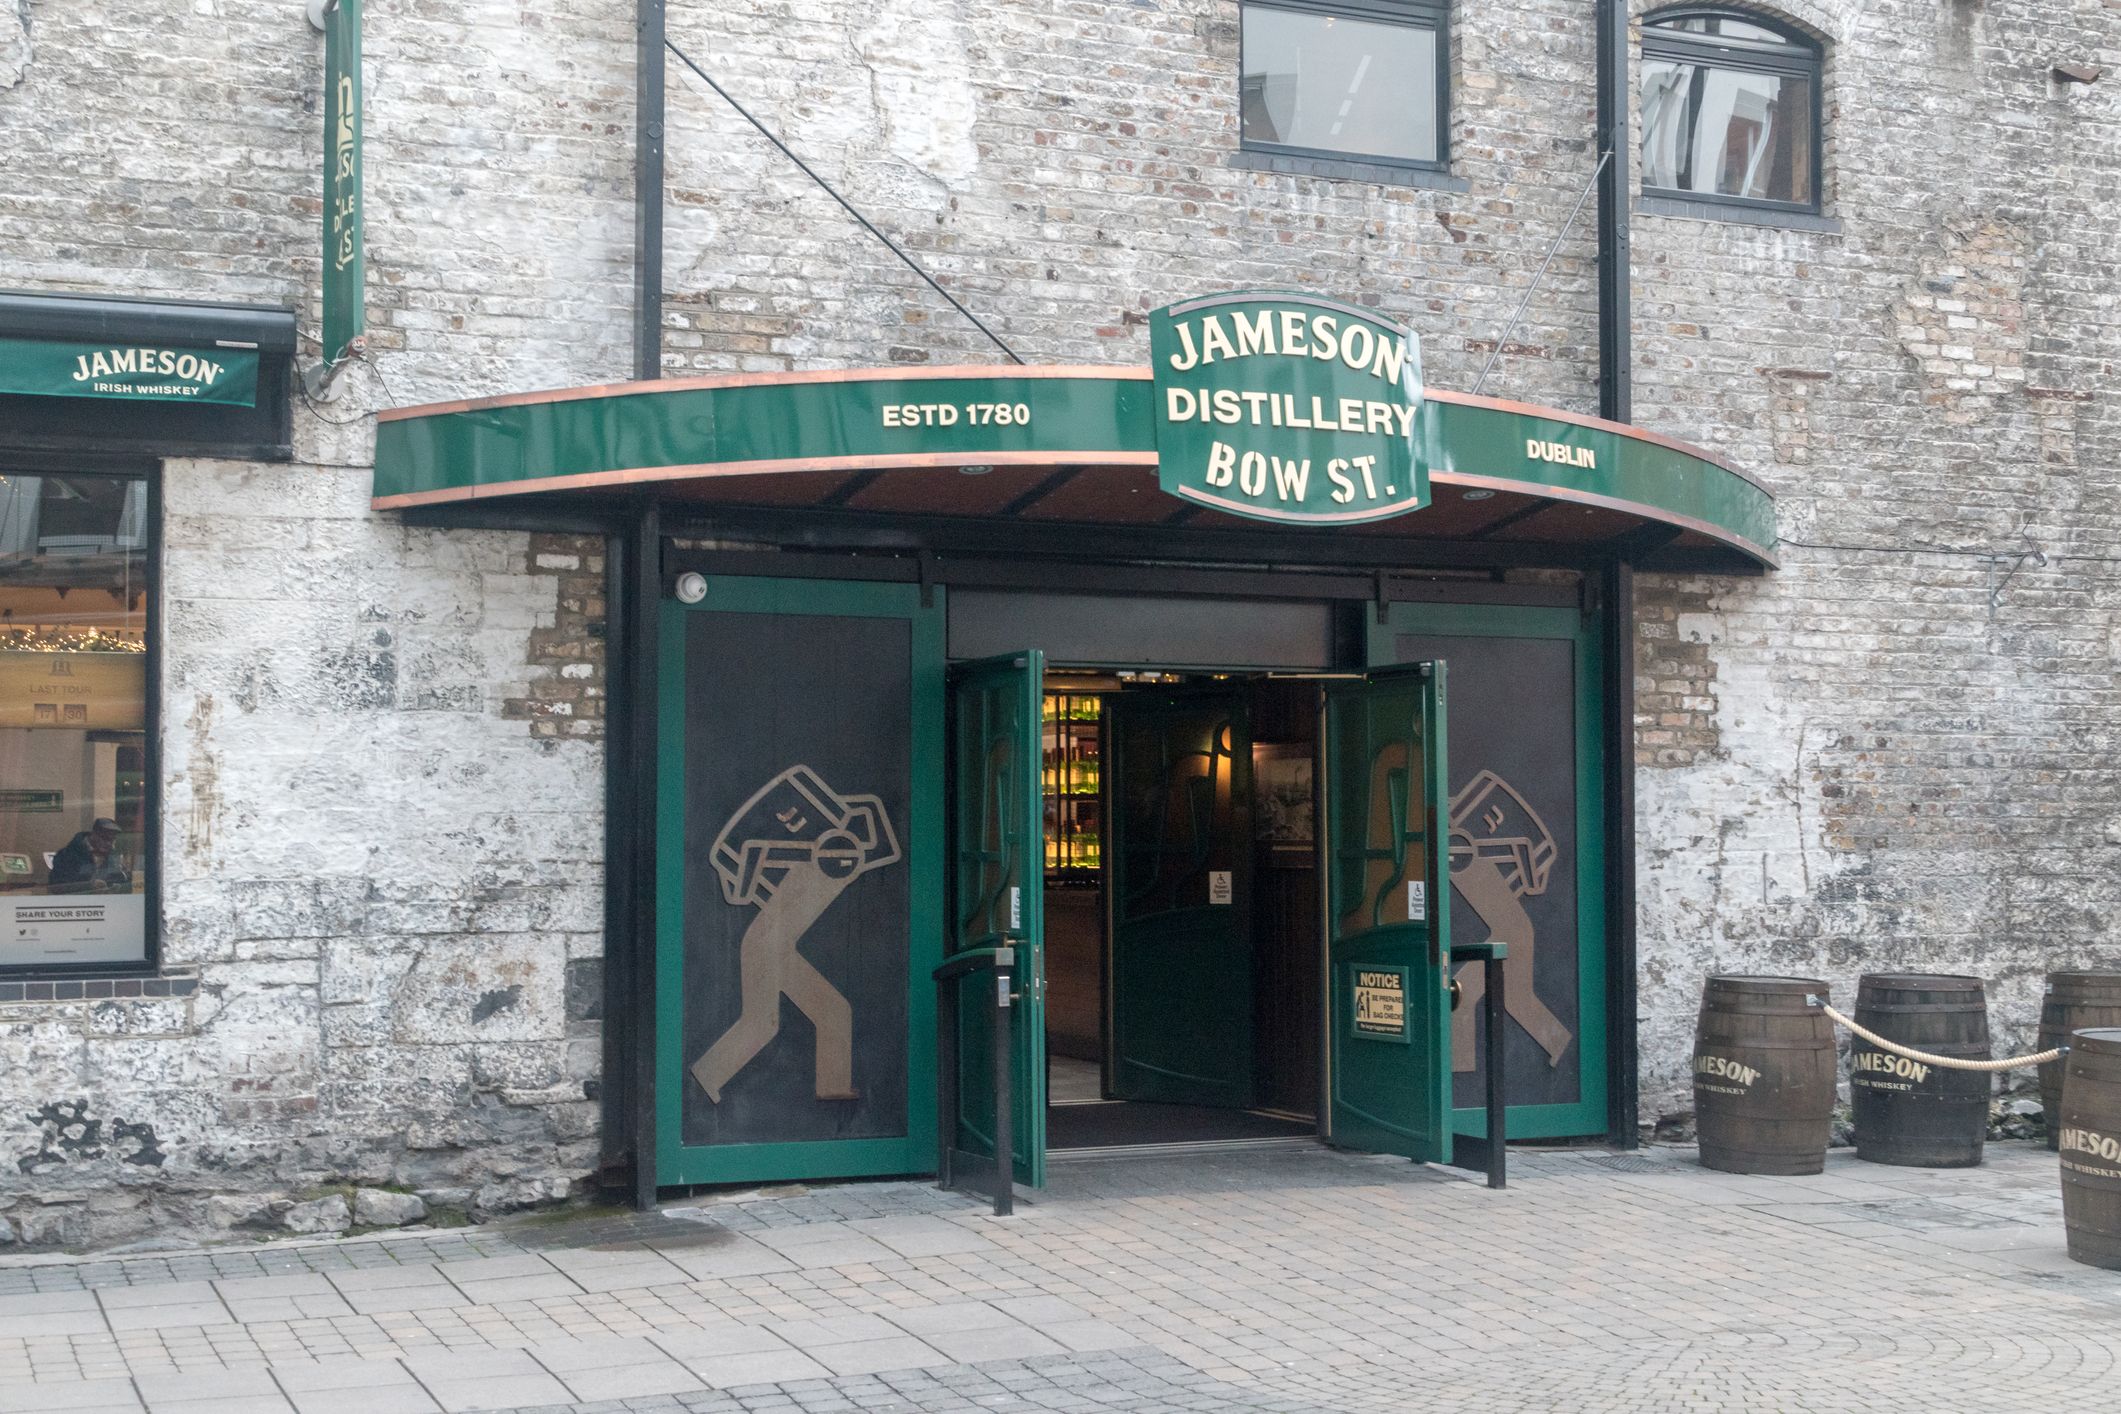 Entrance to Jameson Distillery in Dublin, Ireland